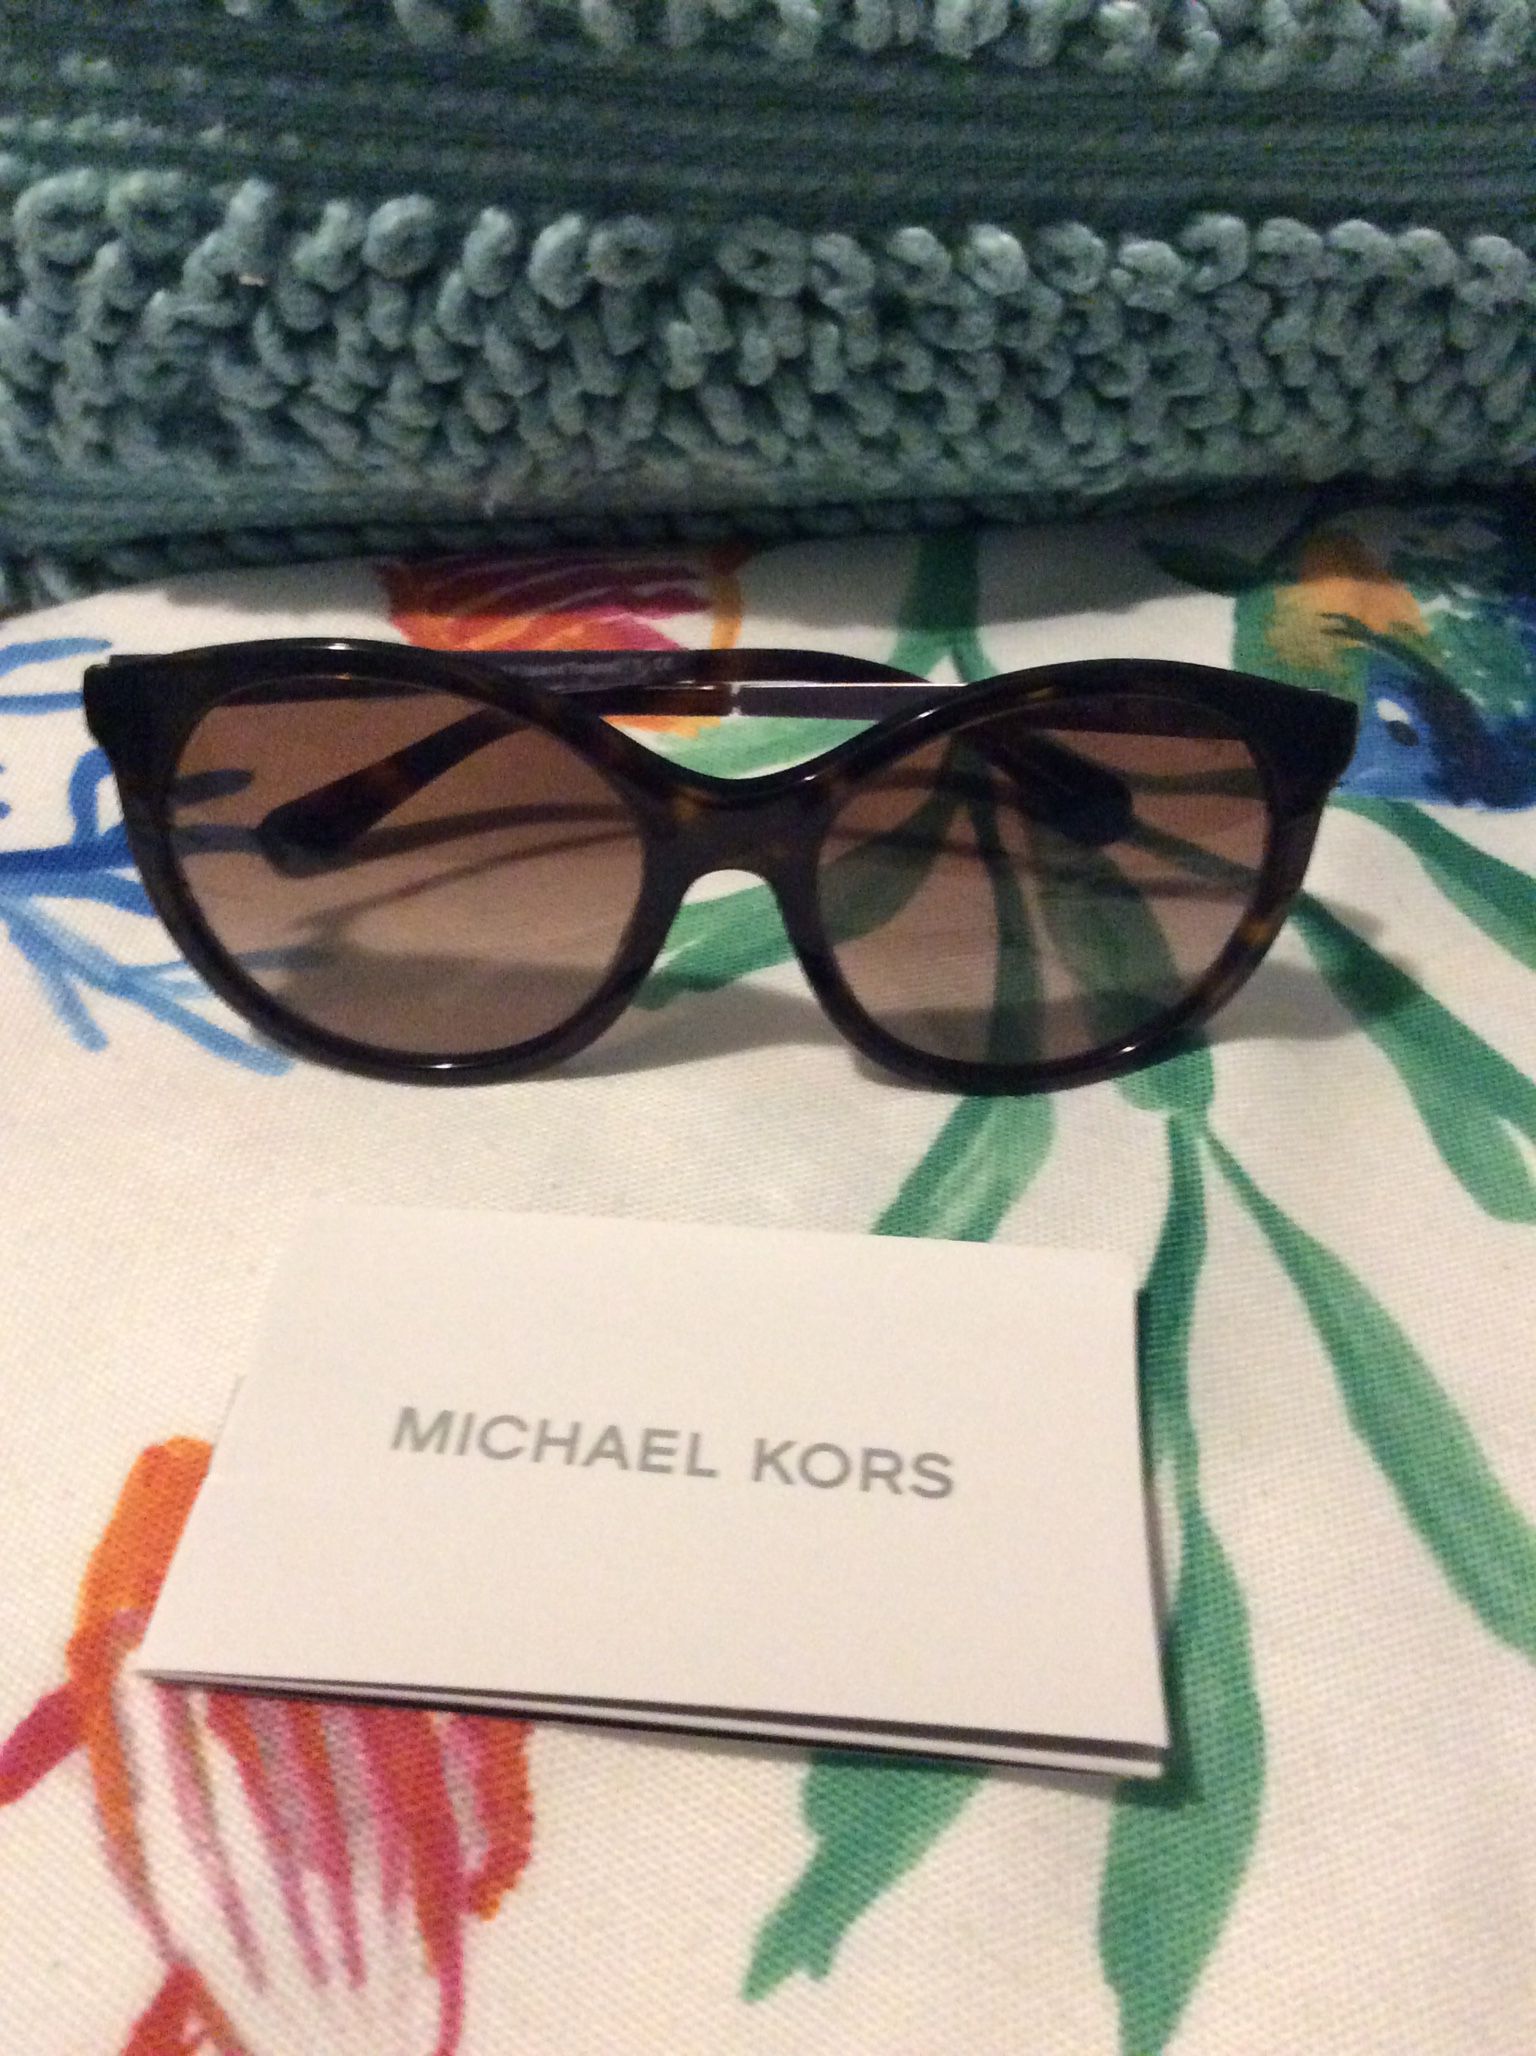 Michael Kors Authentic Sunglasses 